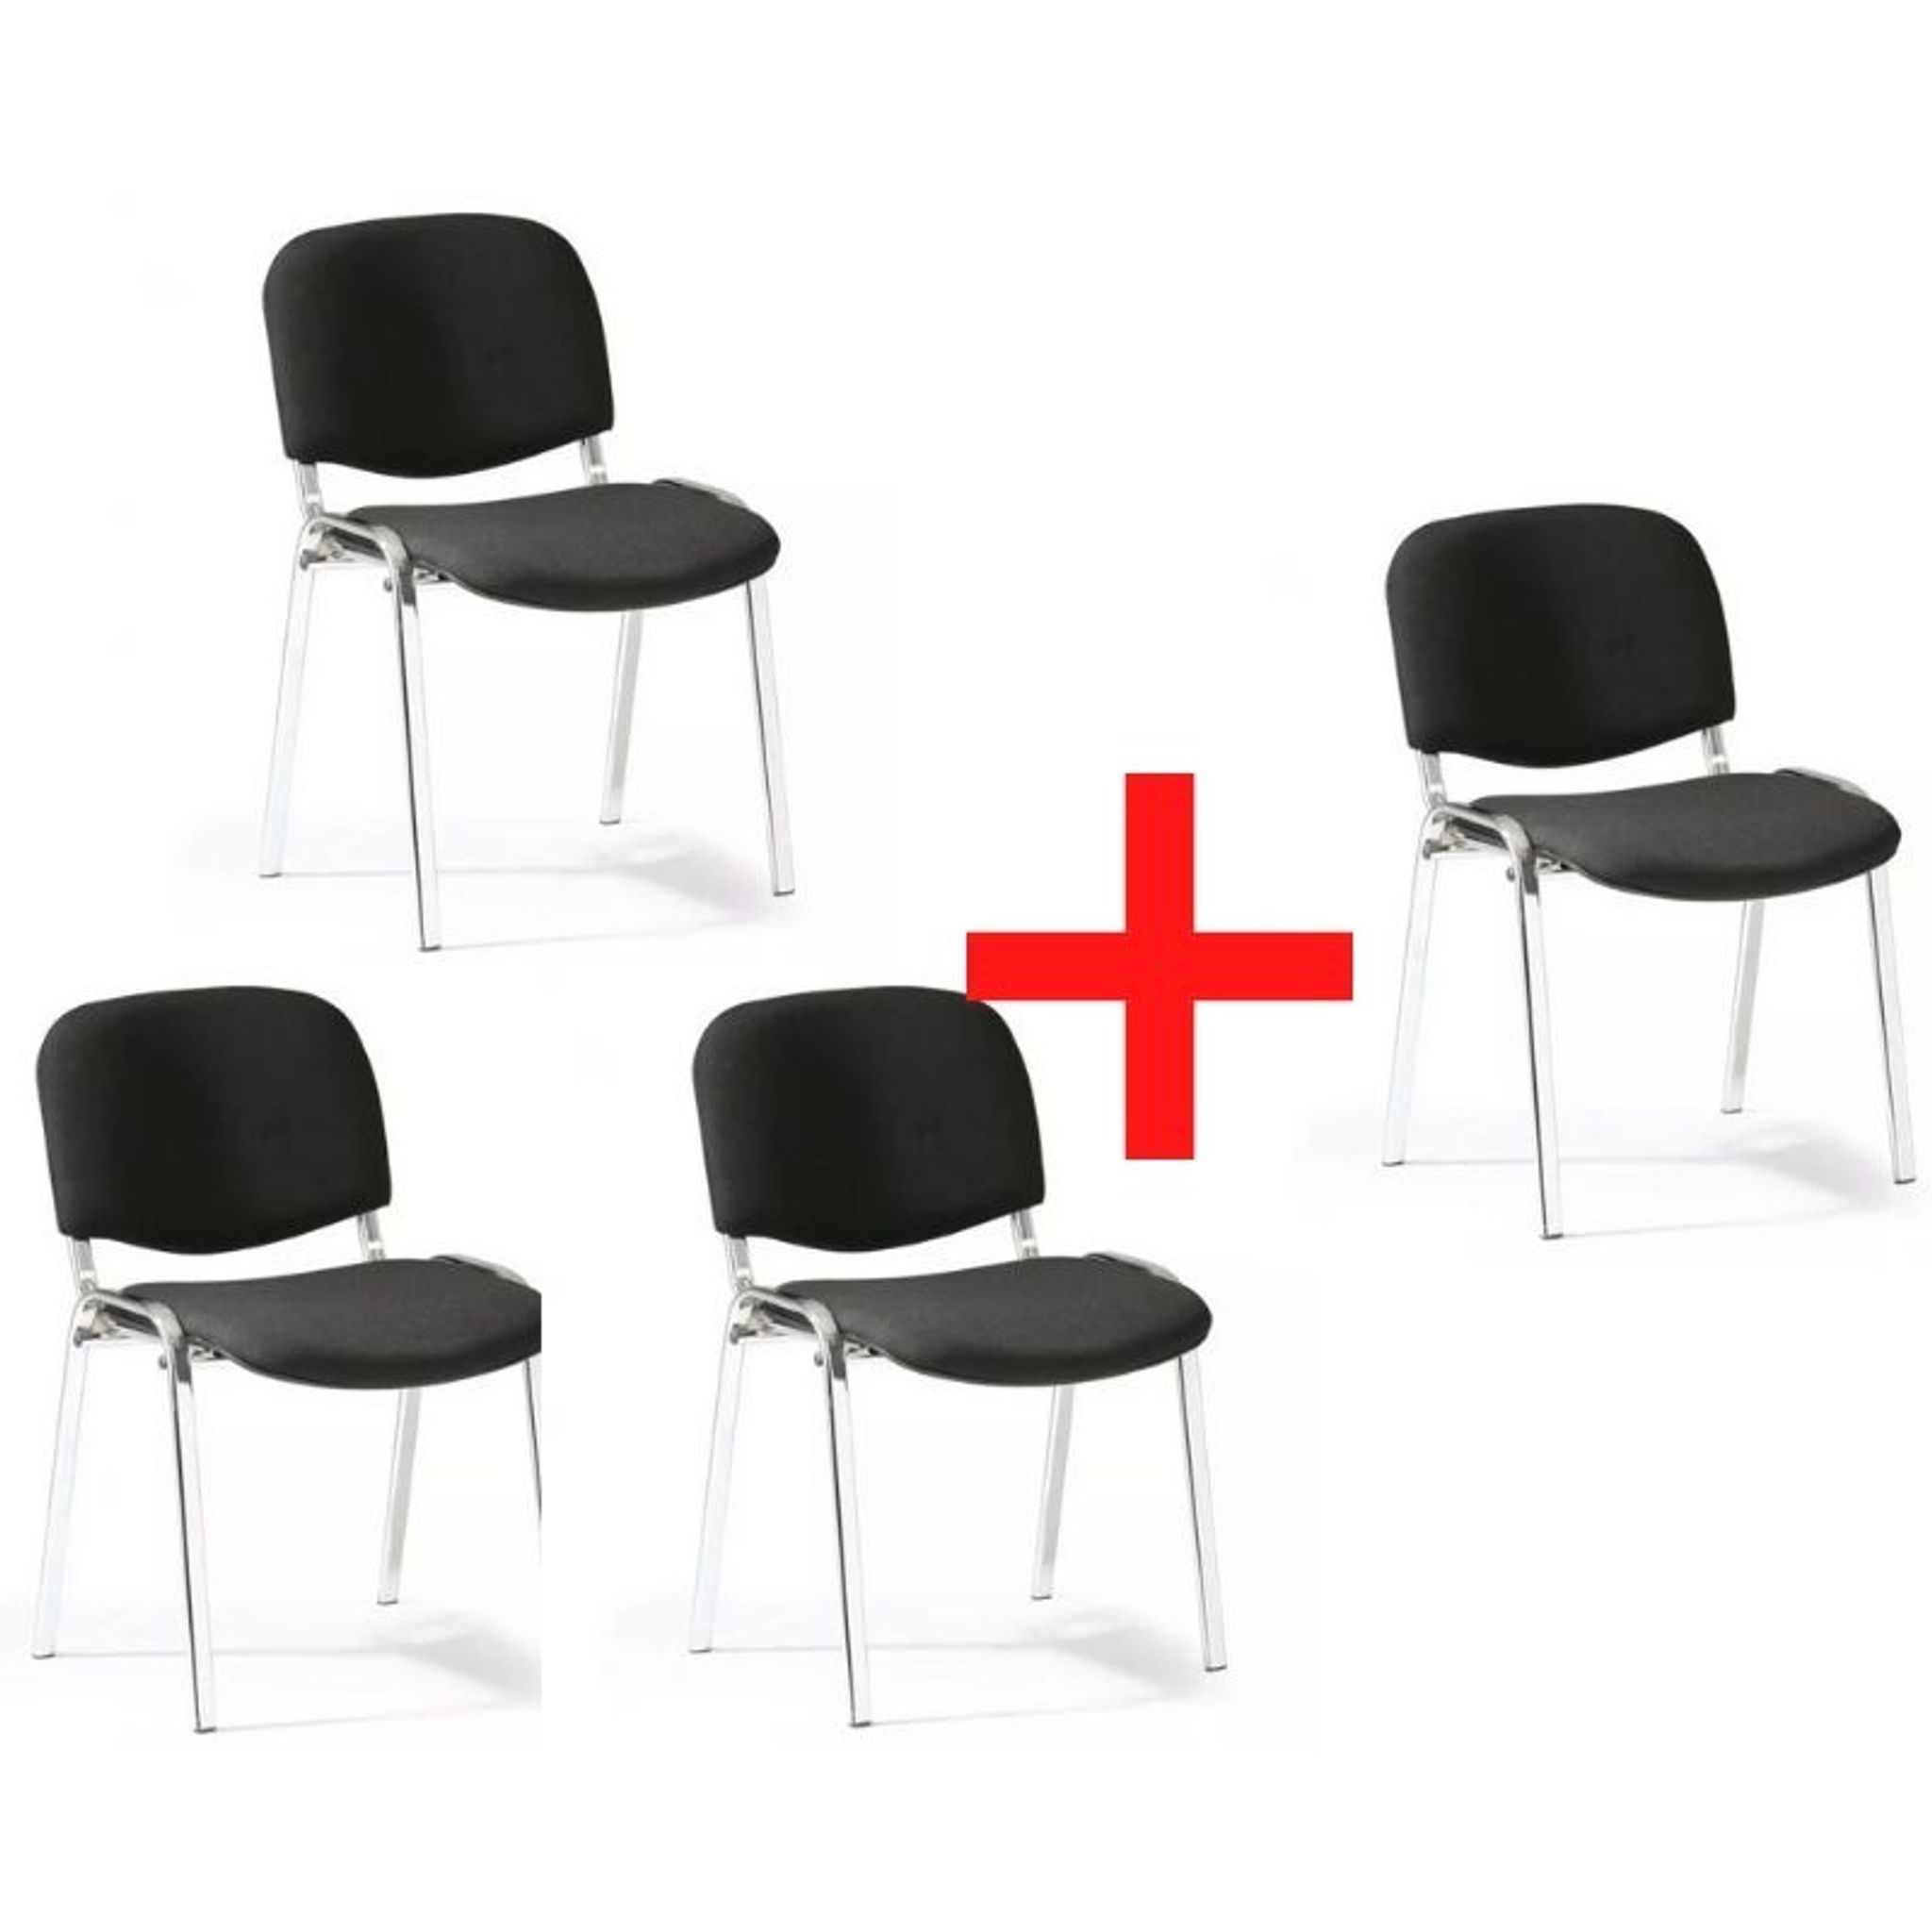 Krzesło konferencyjne VIVA 3+1 GRATIS, chromowane nogi